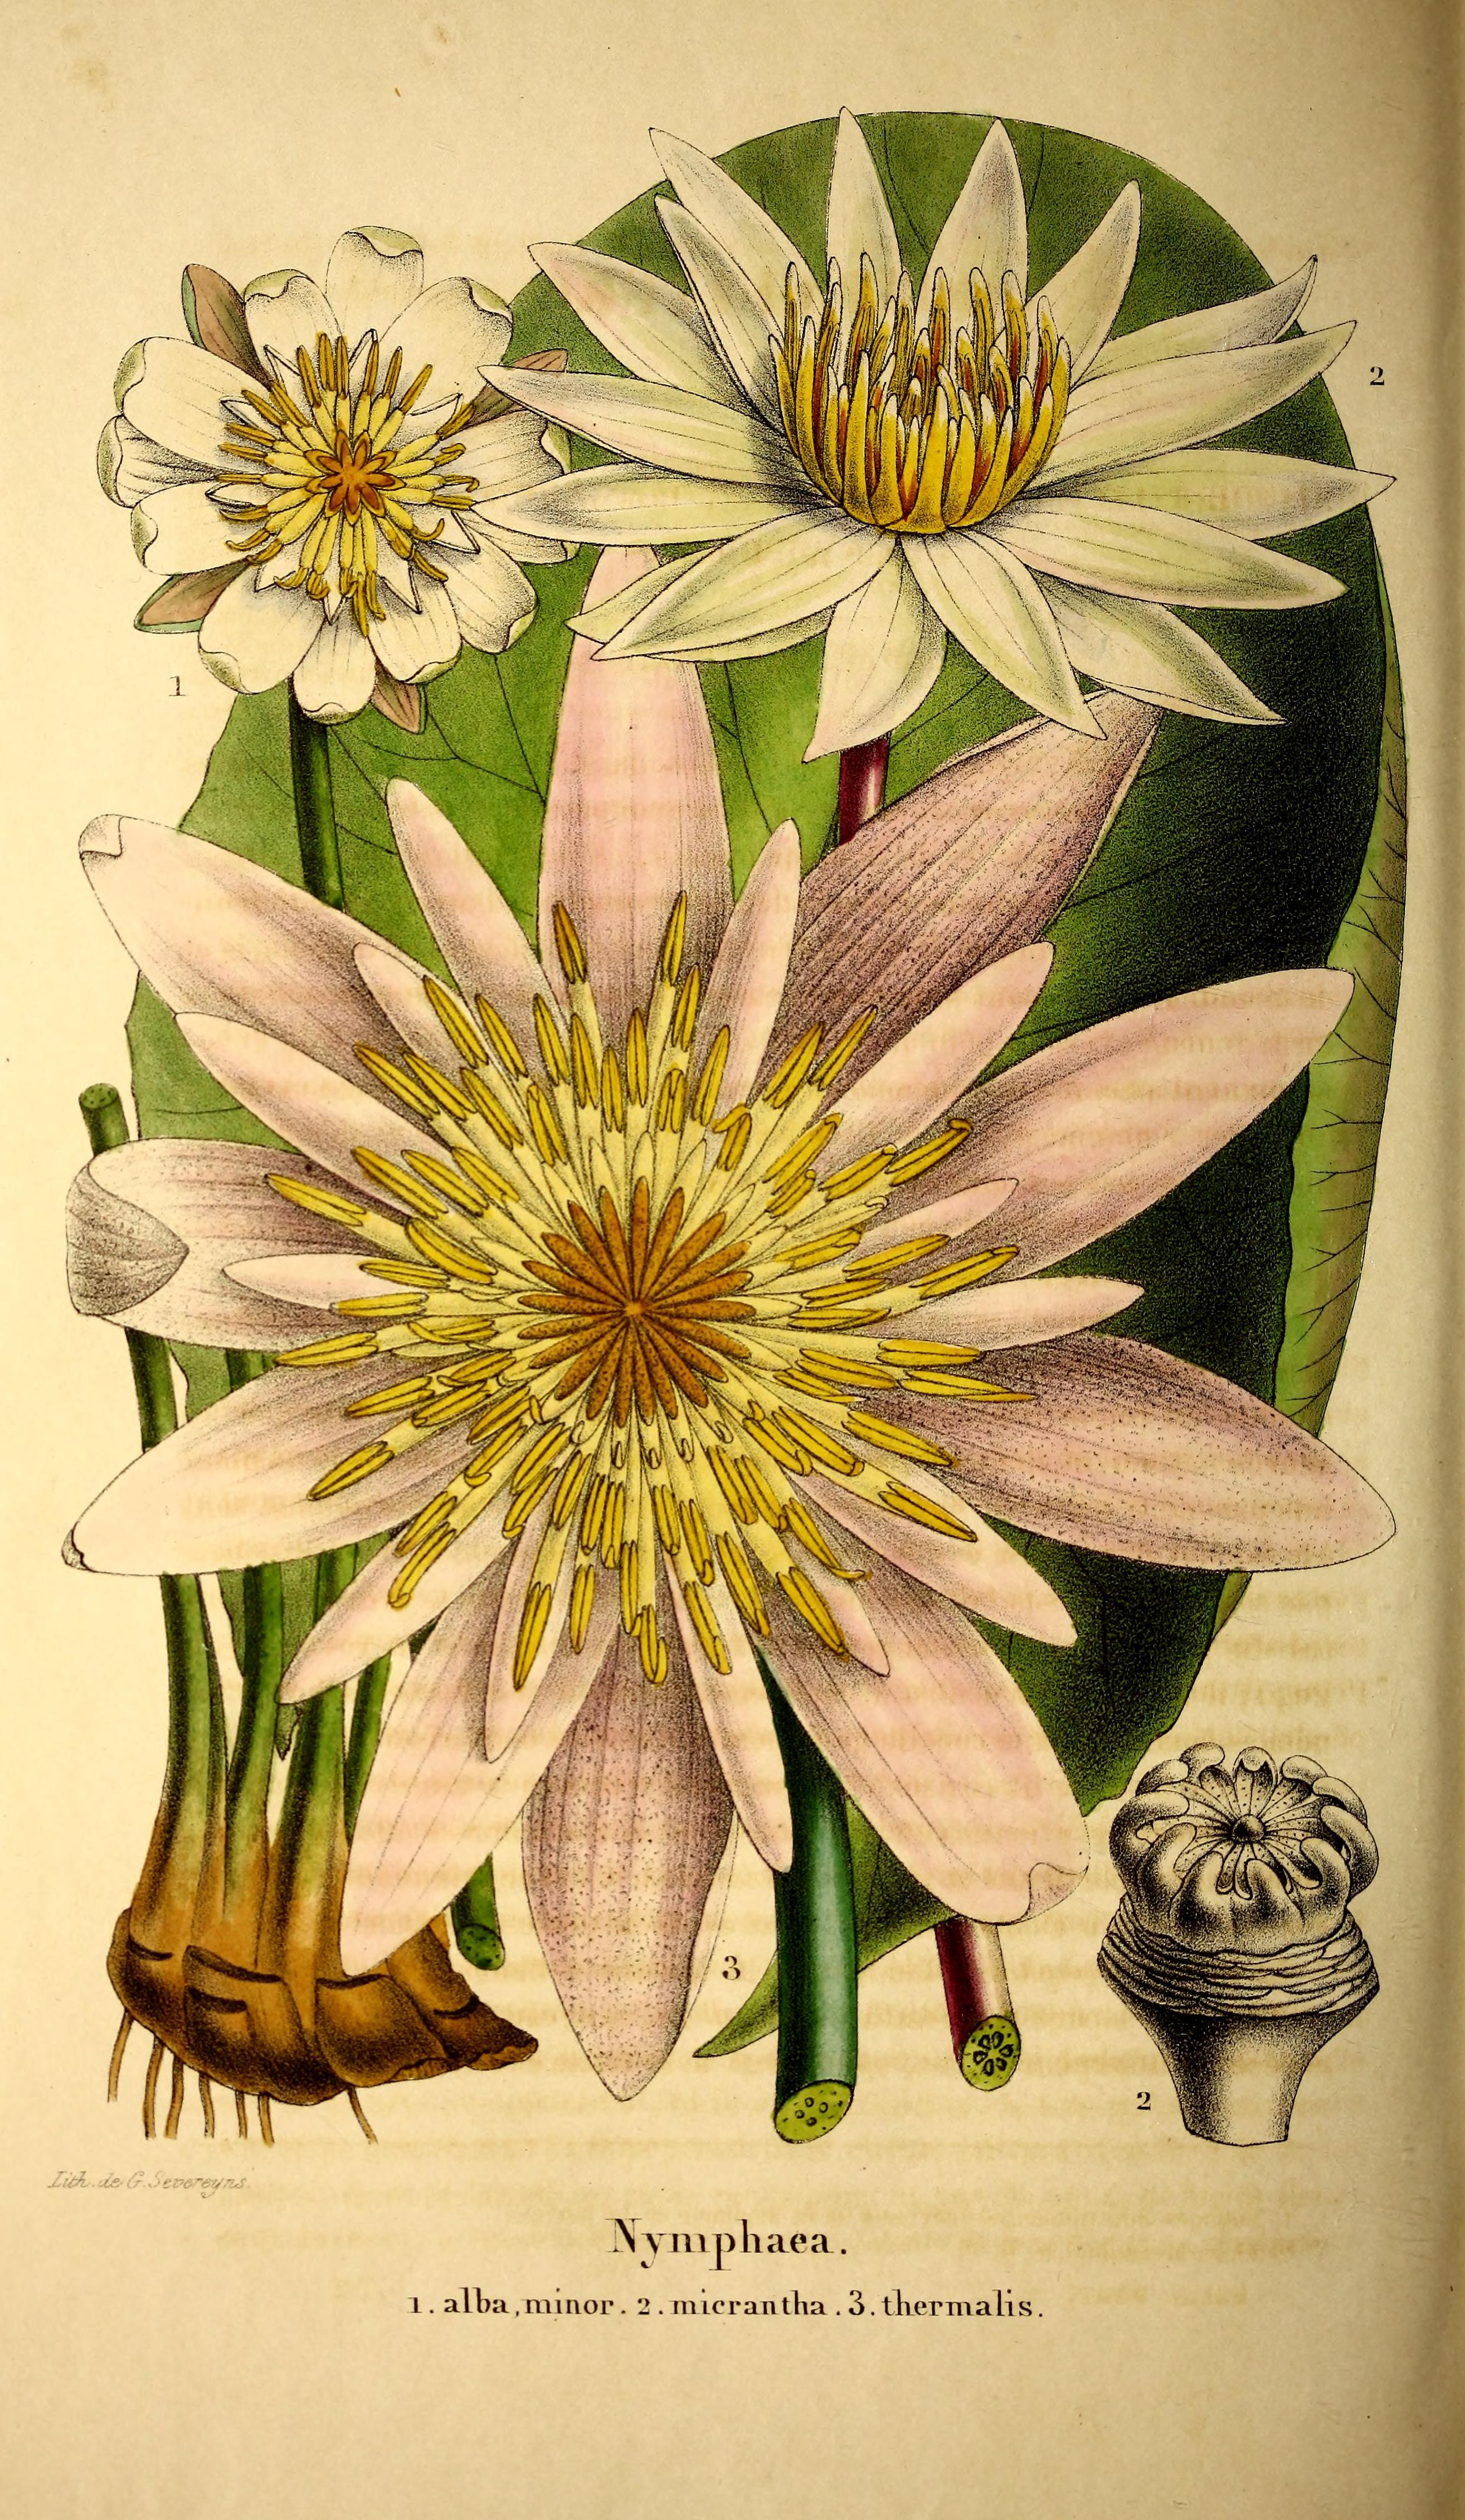 Nymphaea alba var. minor, Nymphaea micrantha, and Nymphaea lotus.